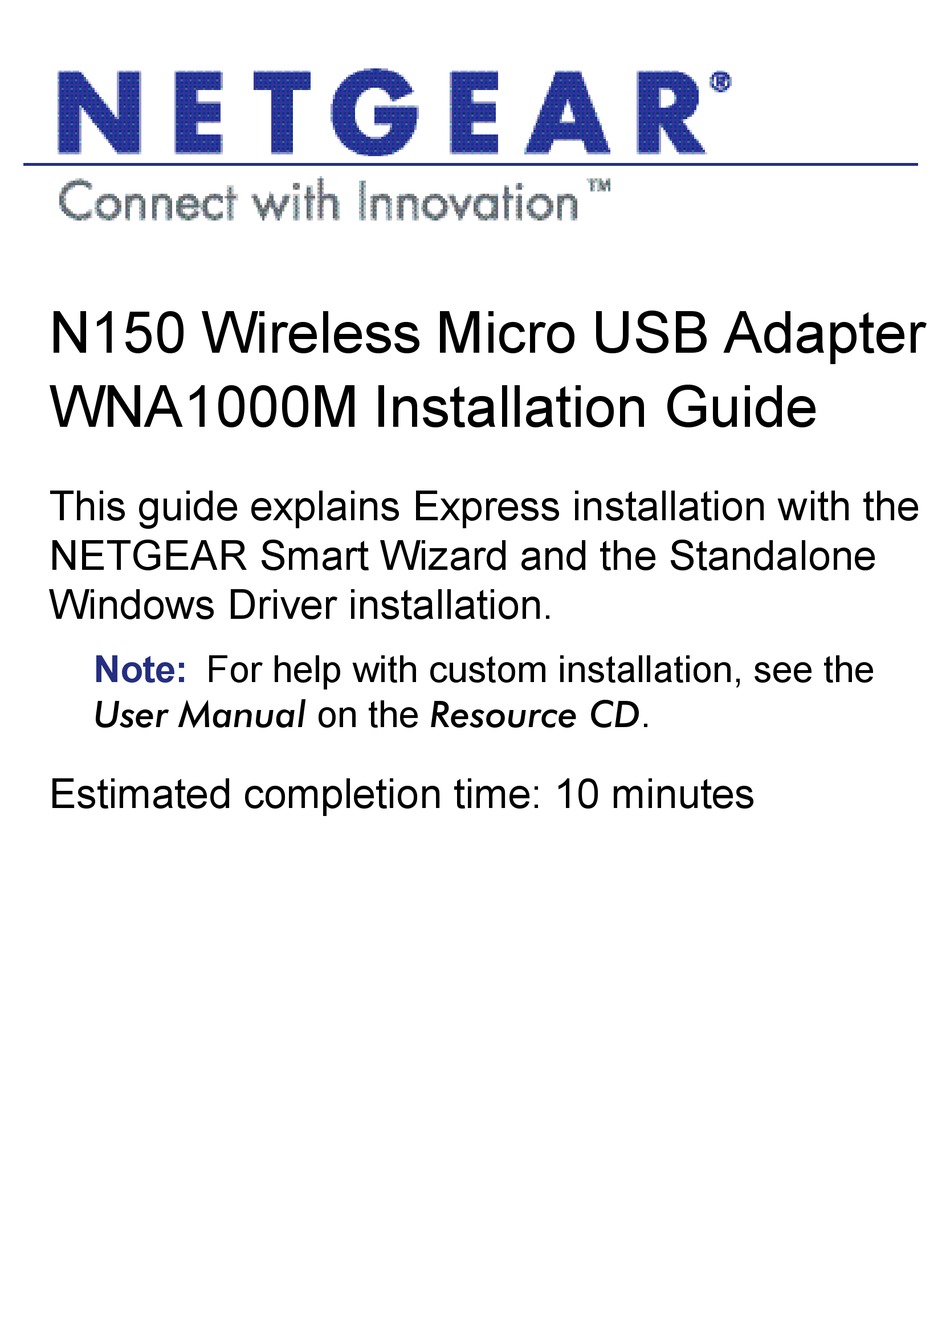 netgear n150 wireless usb adapter windows 10